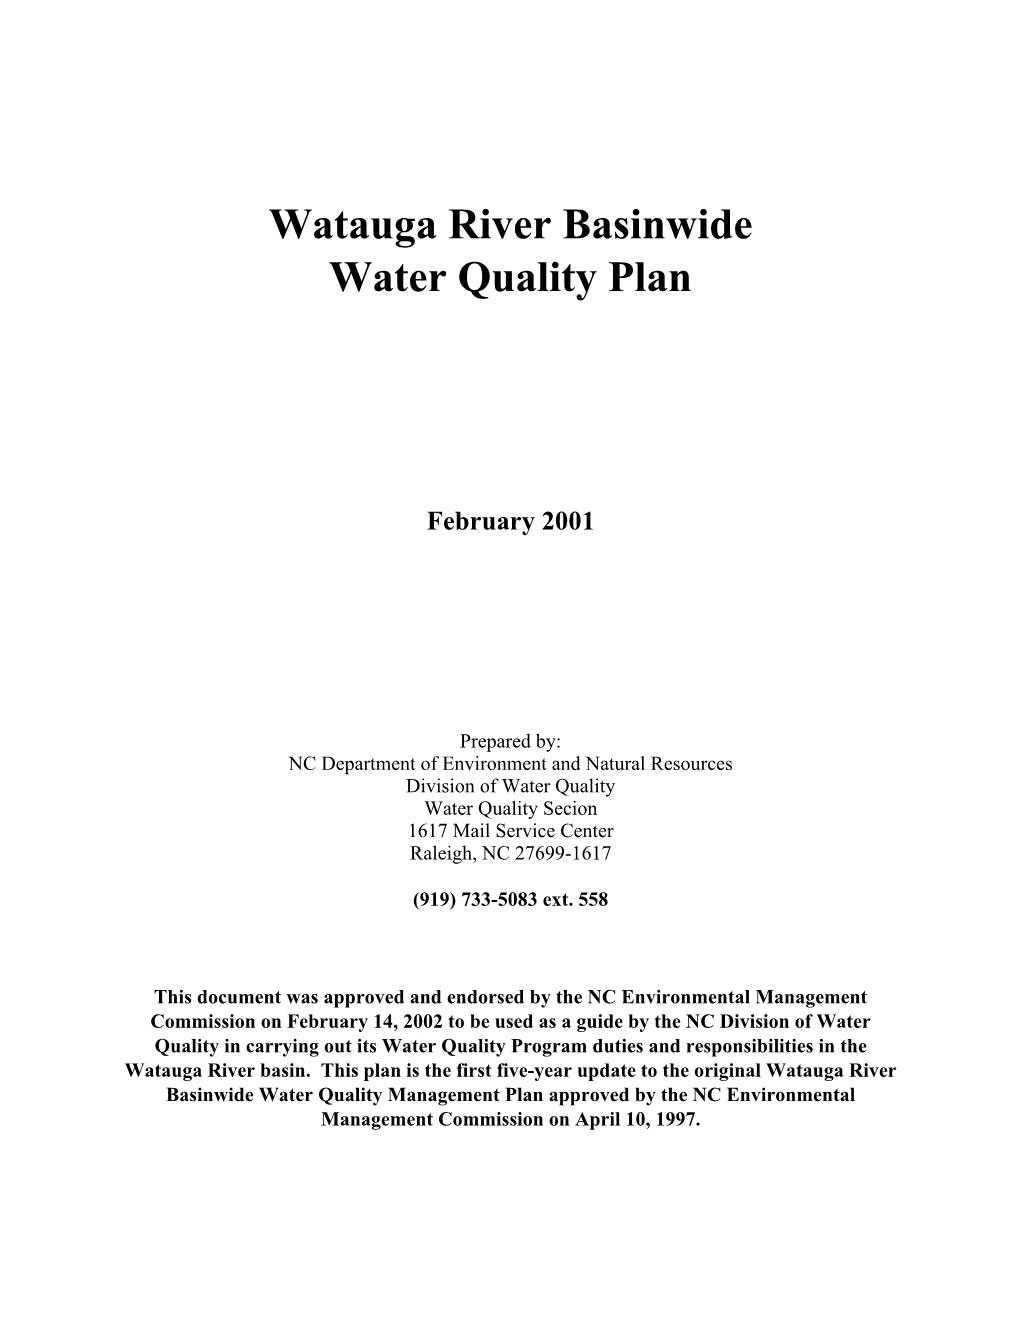 Watauga River Basinwide Water Quality Plan